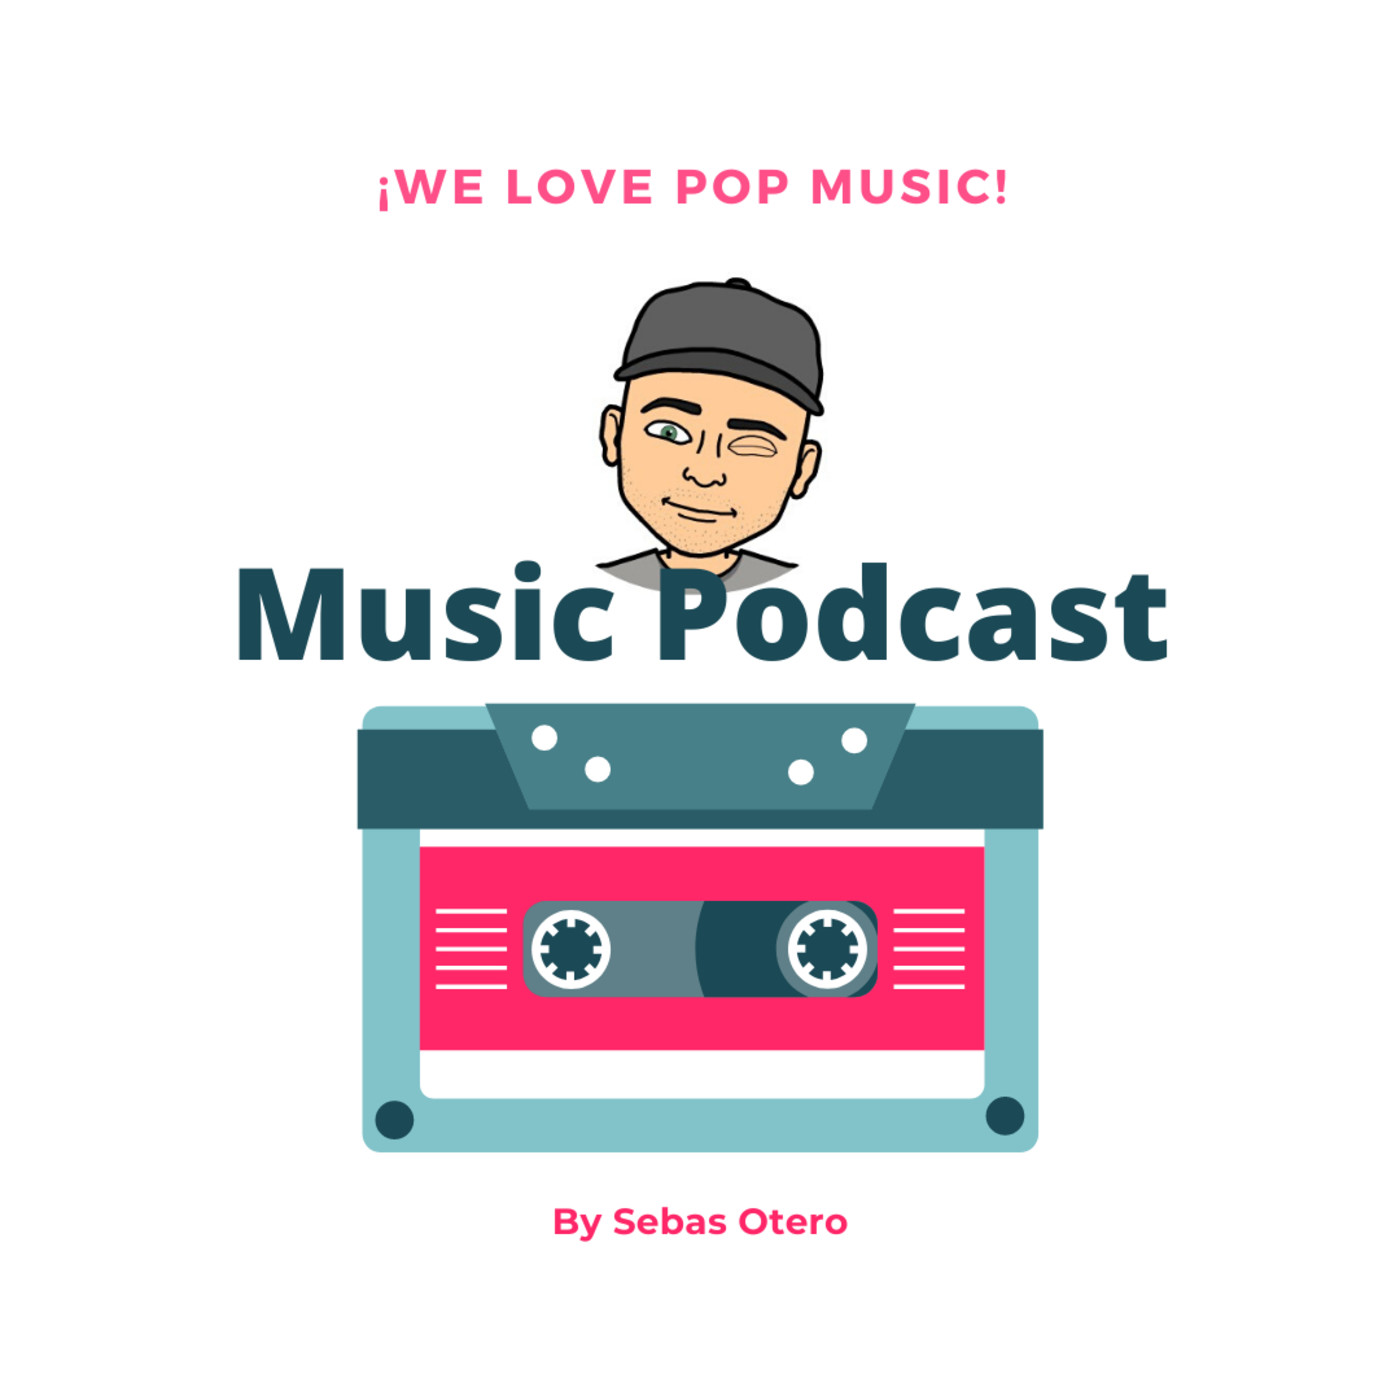 We Love pop Music by Sebas Otero